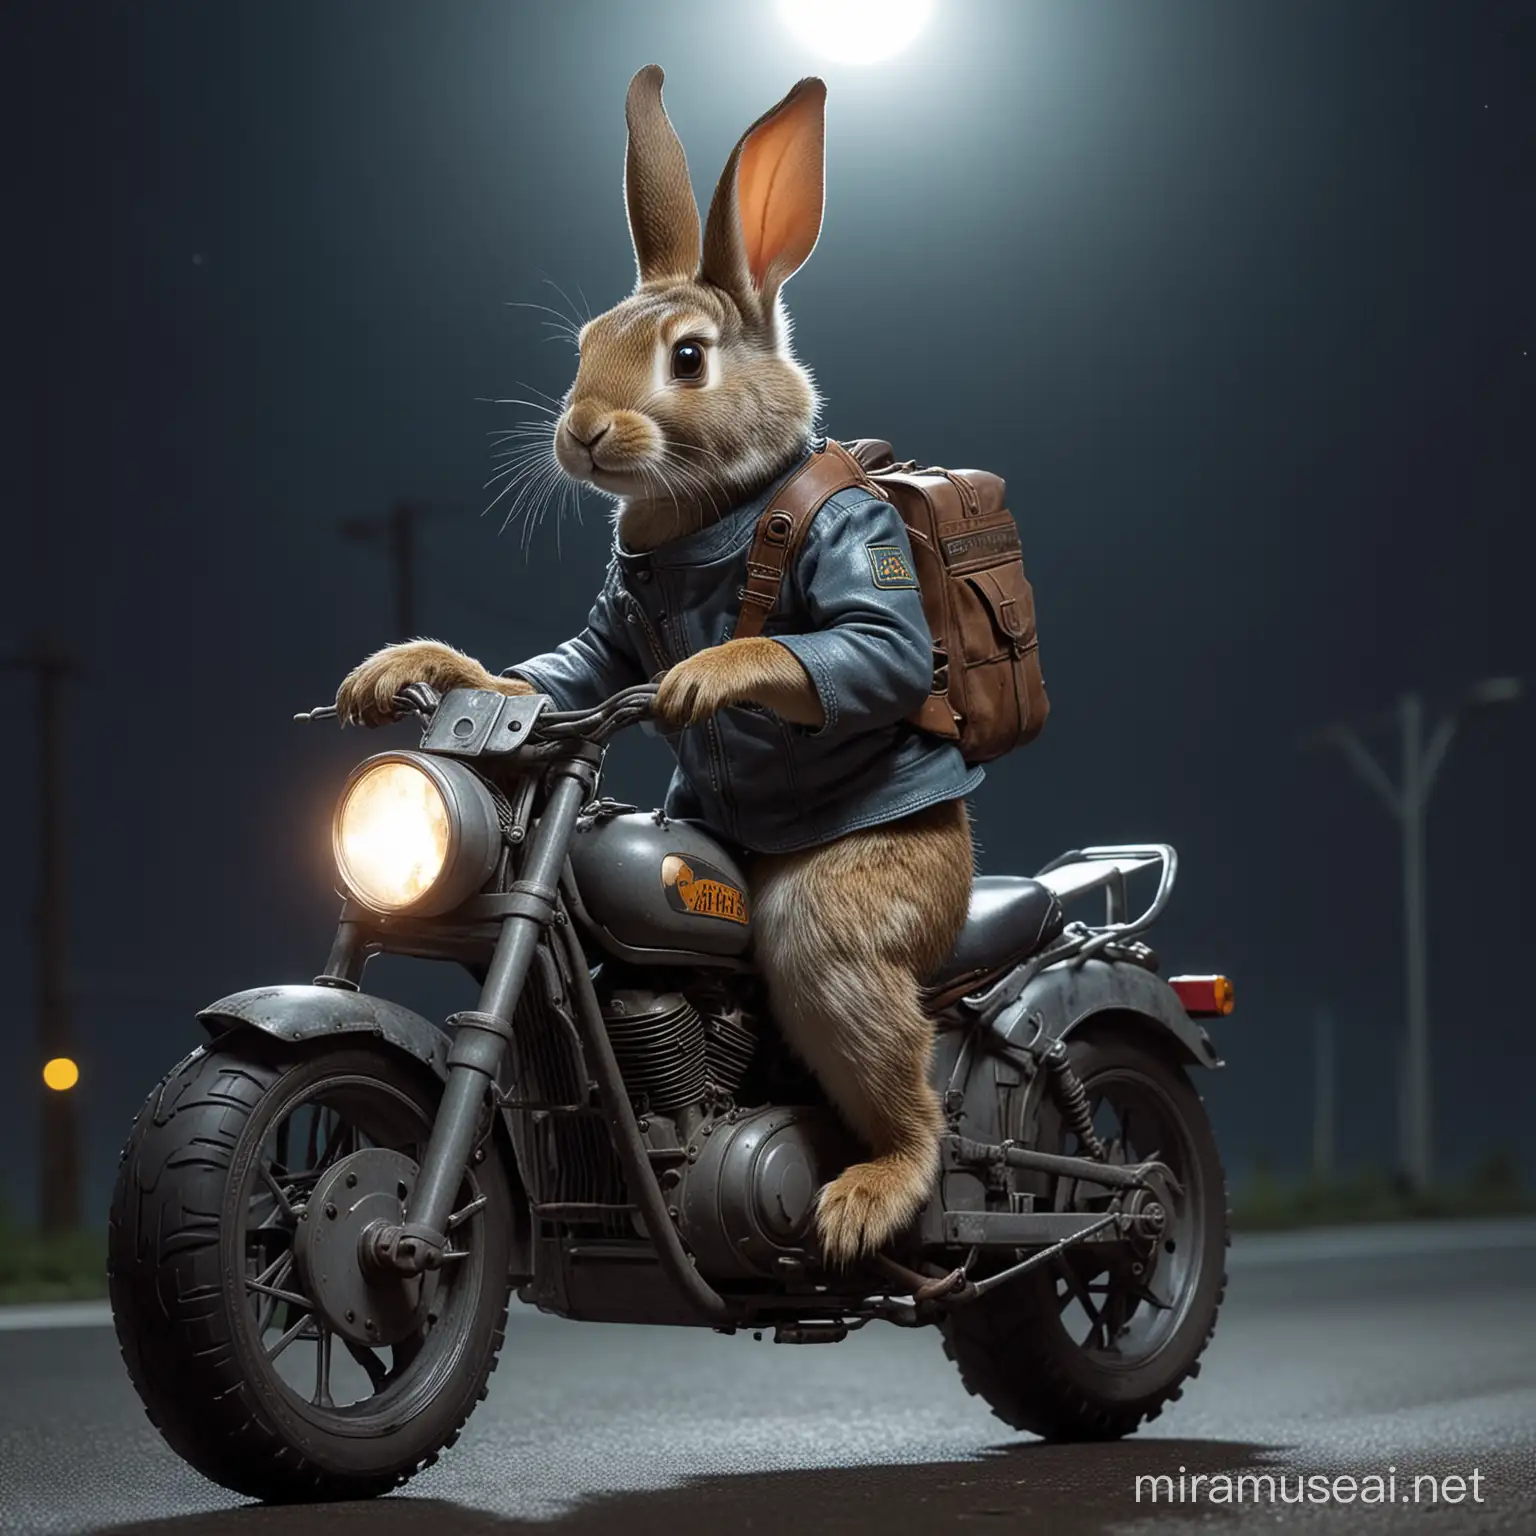 Nighttime Adventure Rabbit Riding a Motorbike